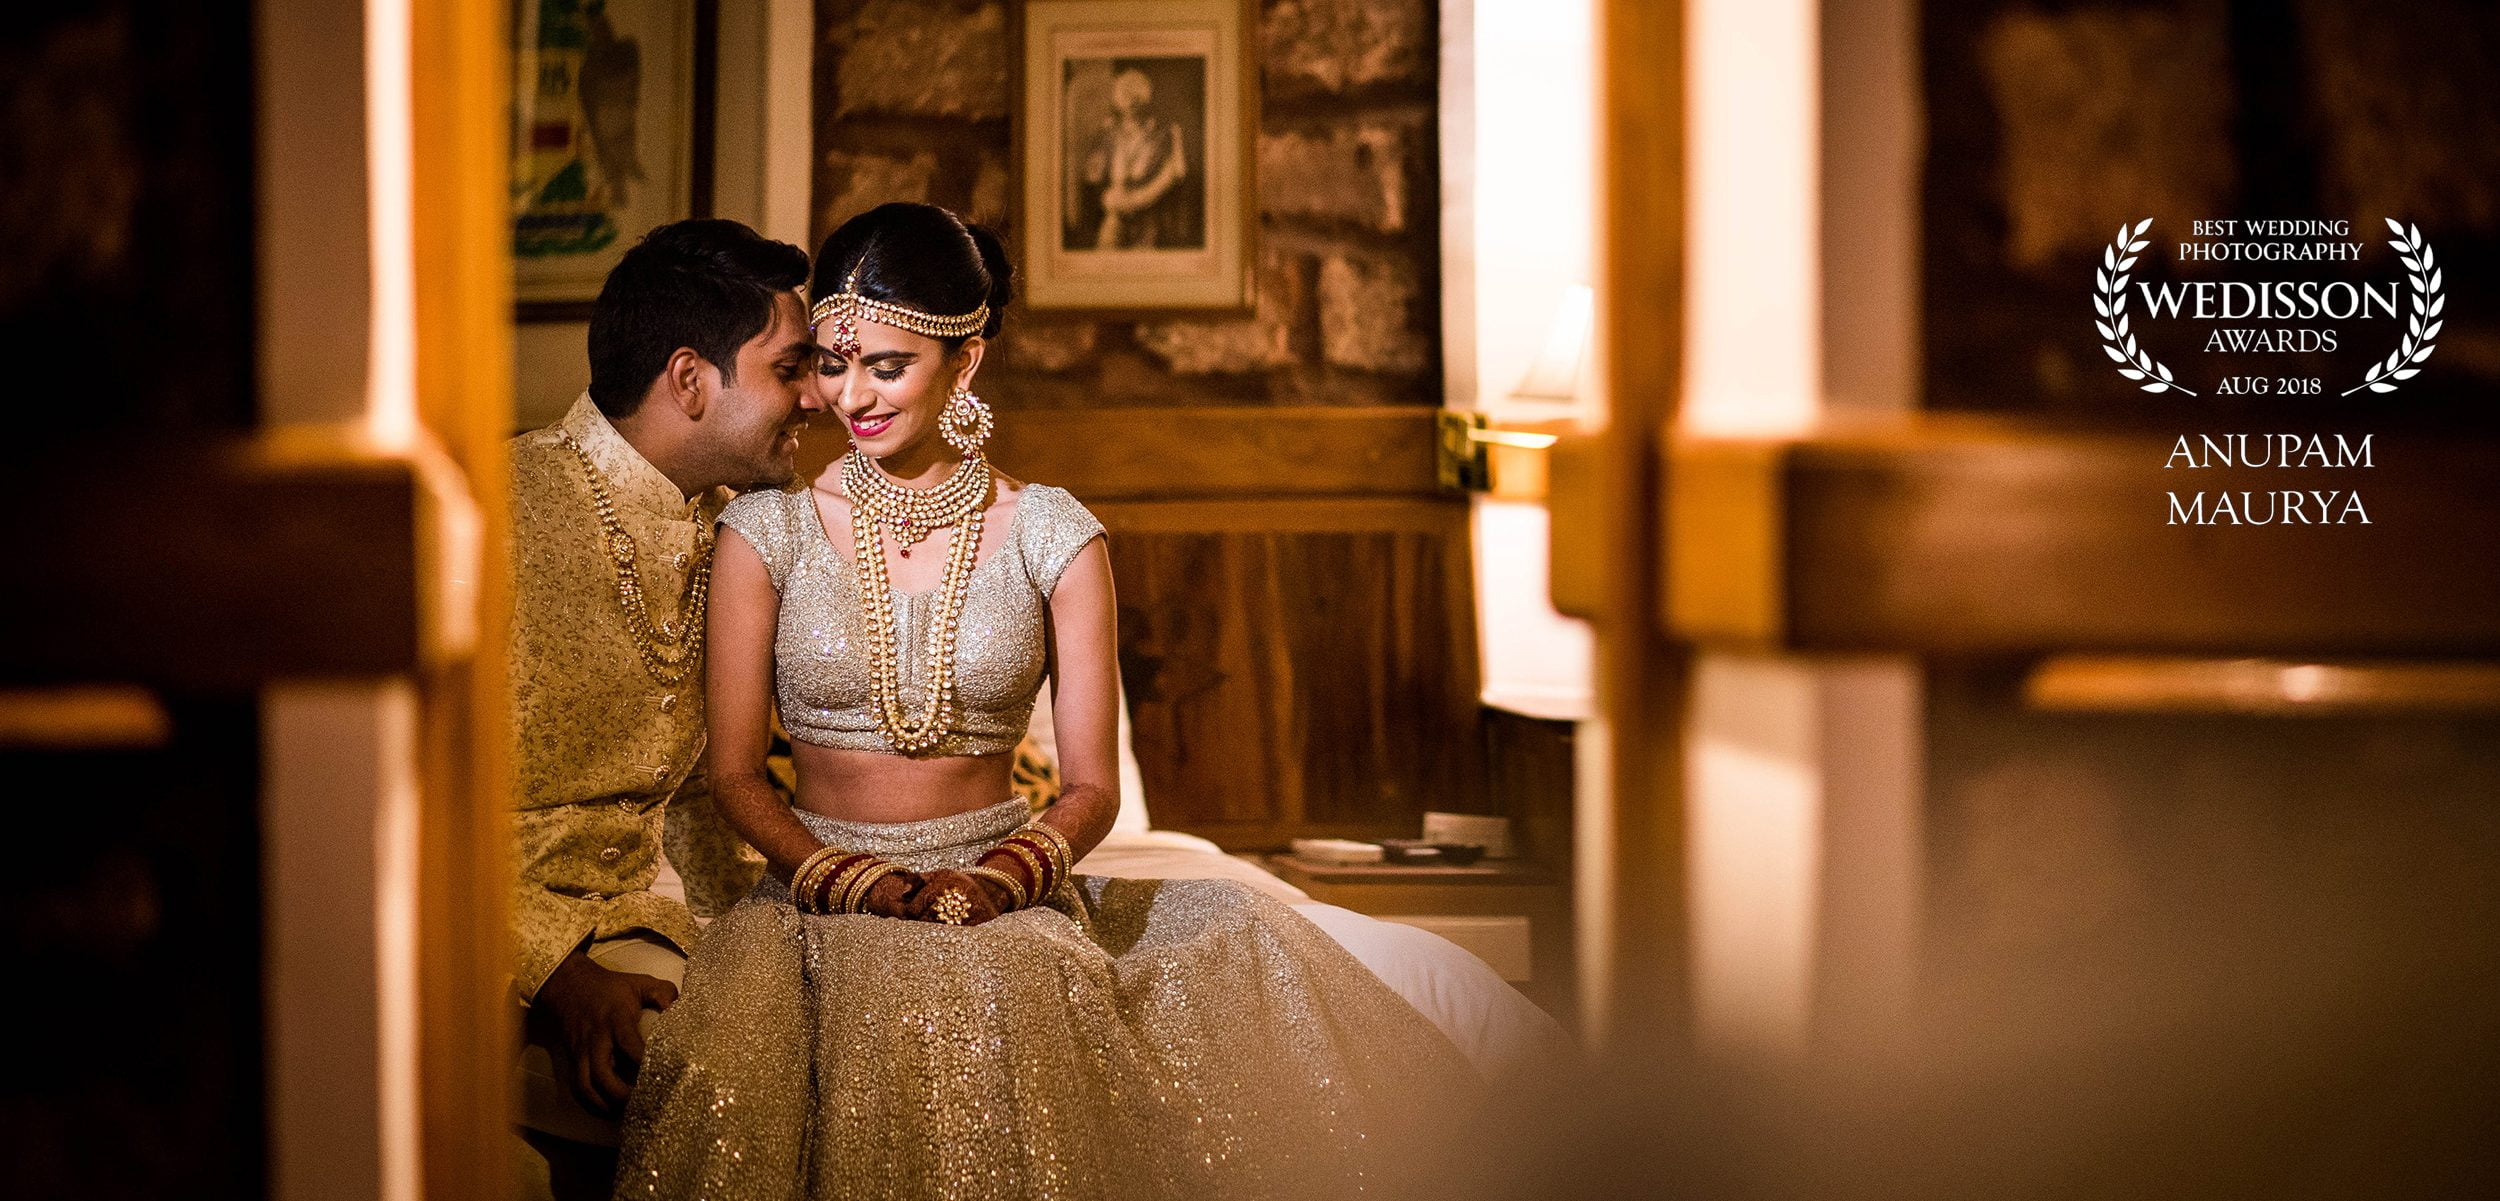 KnotsbyAMP is India's top wedding photographer